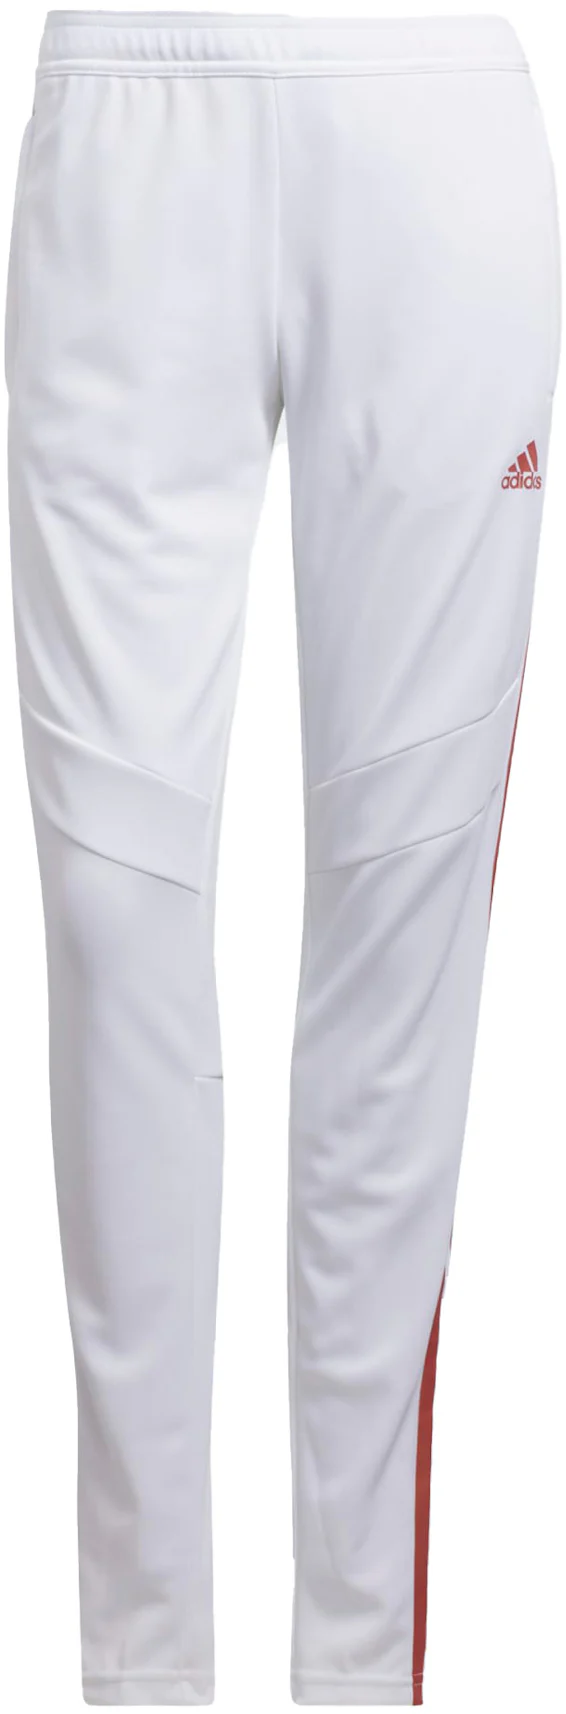 White training pants